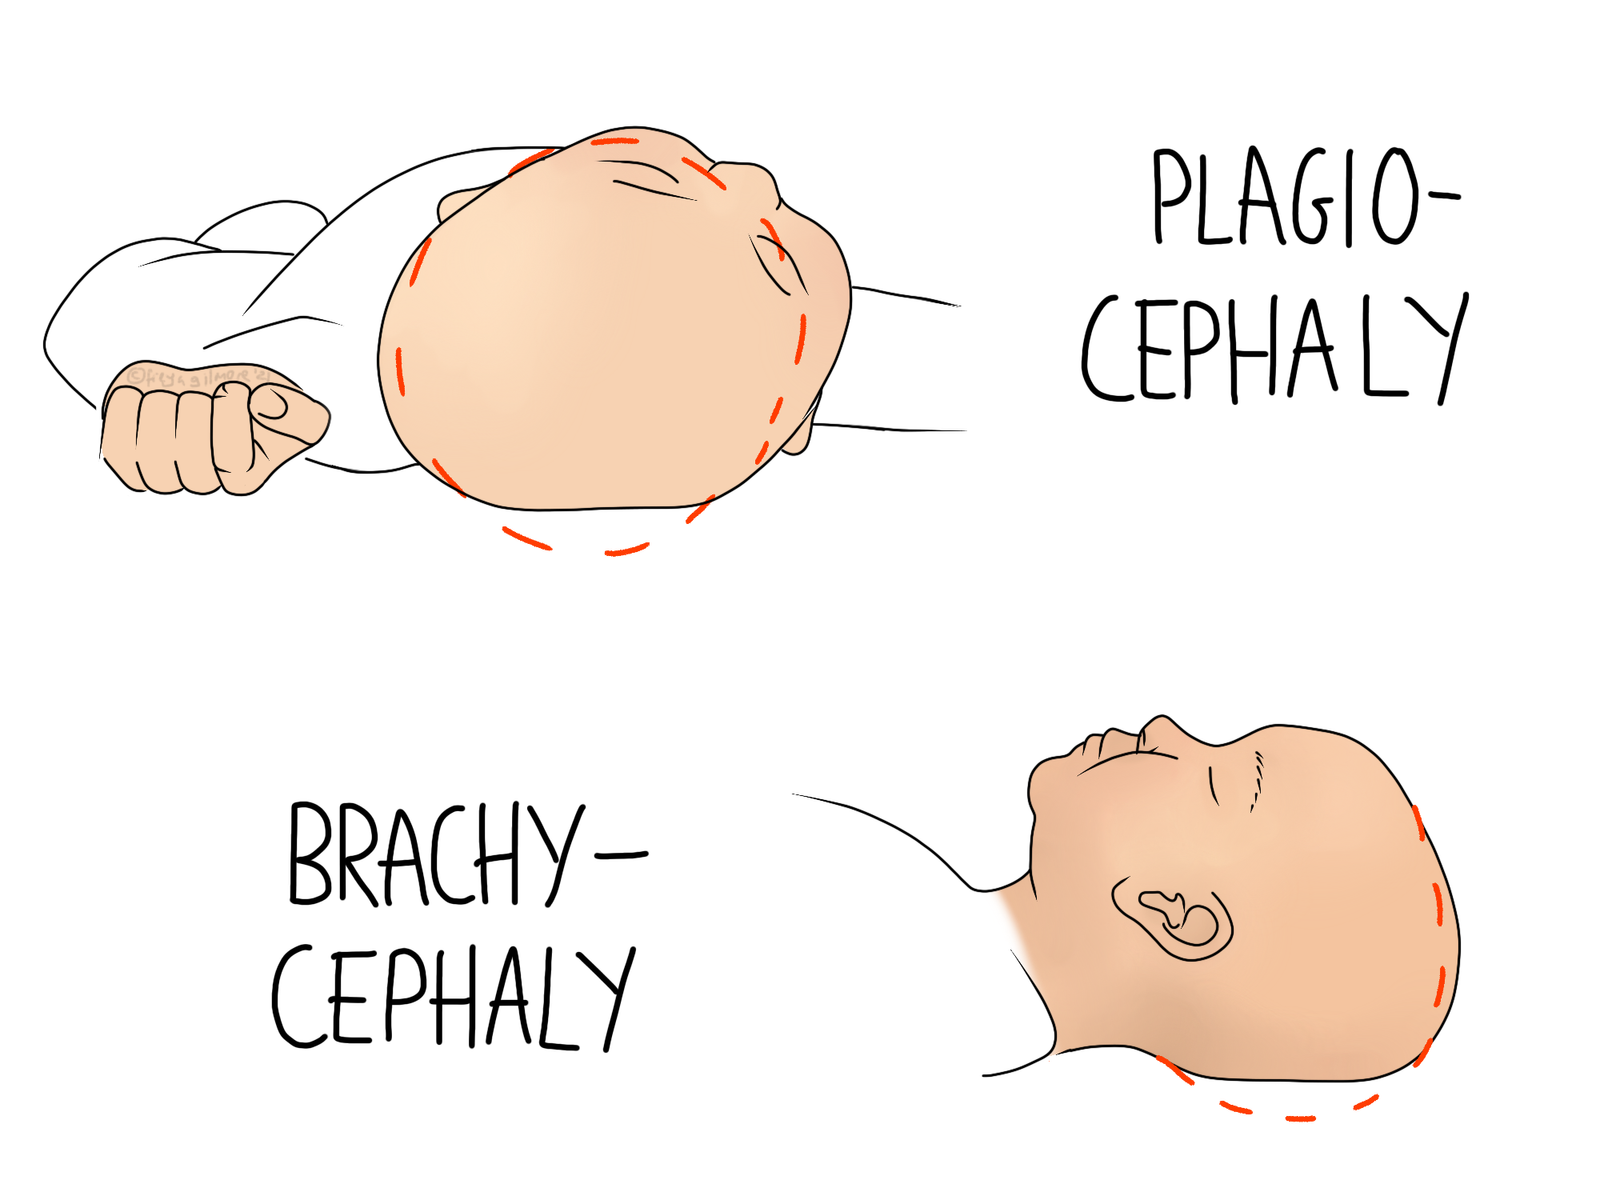 SPD: Symphysis Pubis Dysfunction - Gemini Osteopathy